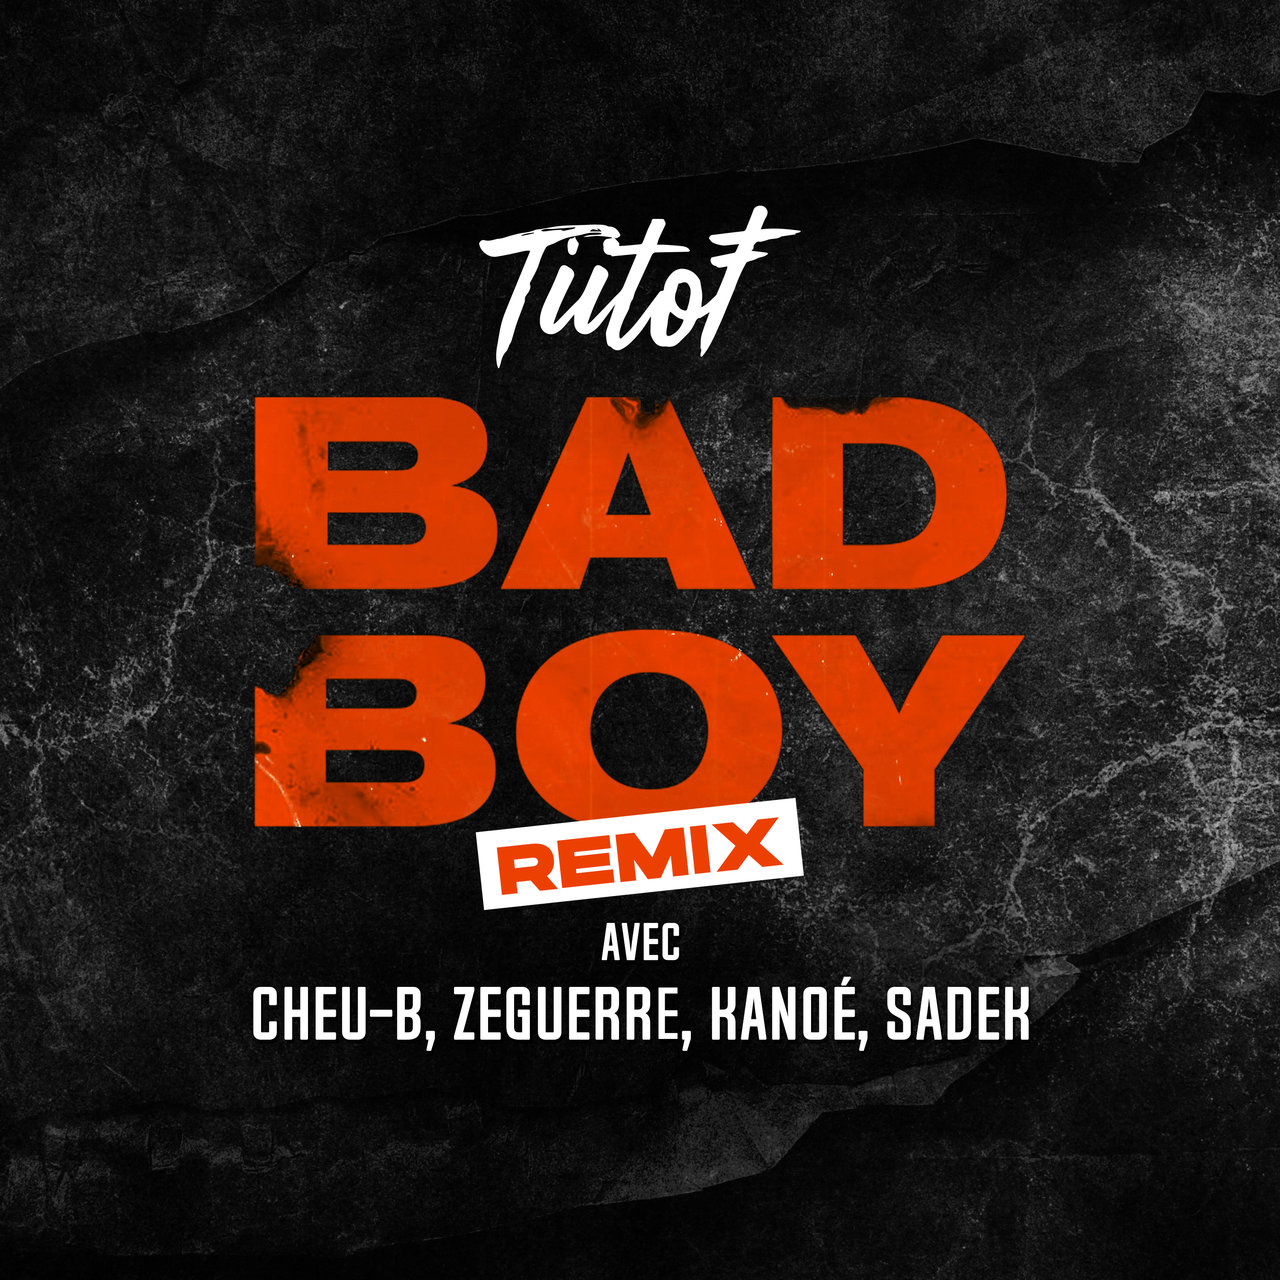 Tiitof - Bad Boy (Remix) (ft. Cheu-B, Zeguerre, Kanoé and Sadek) (Cover)